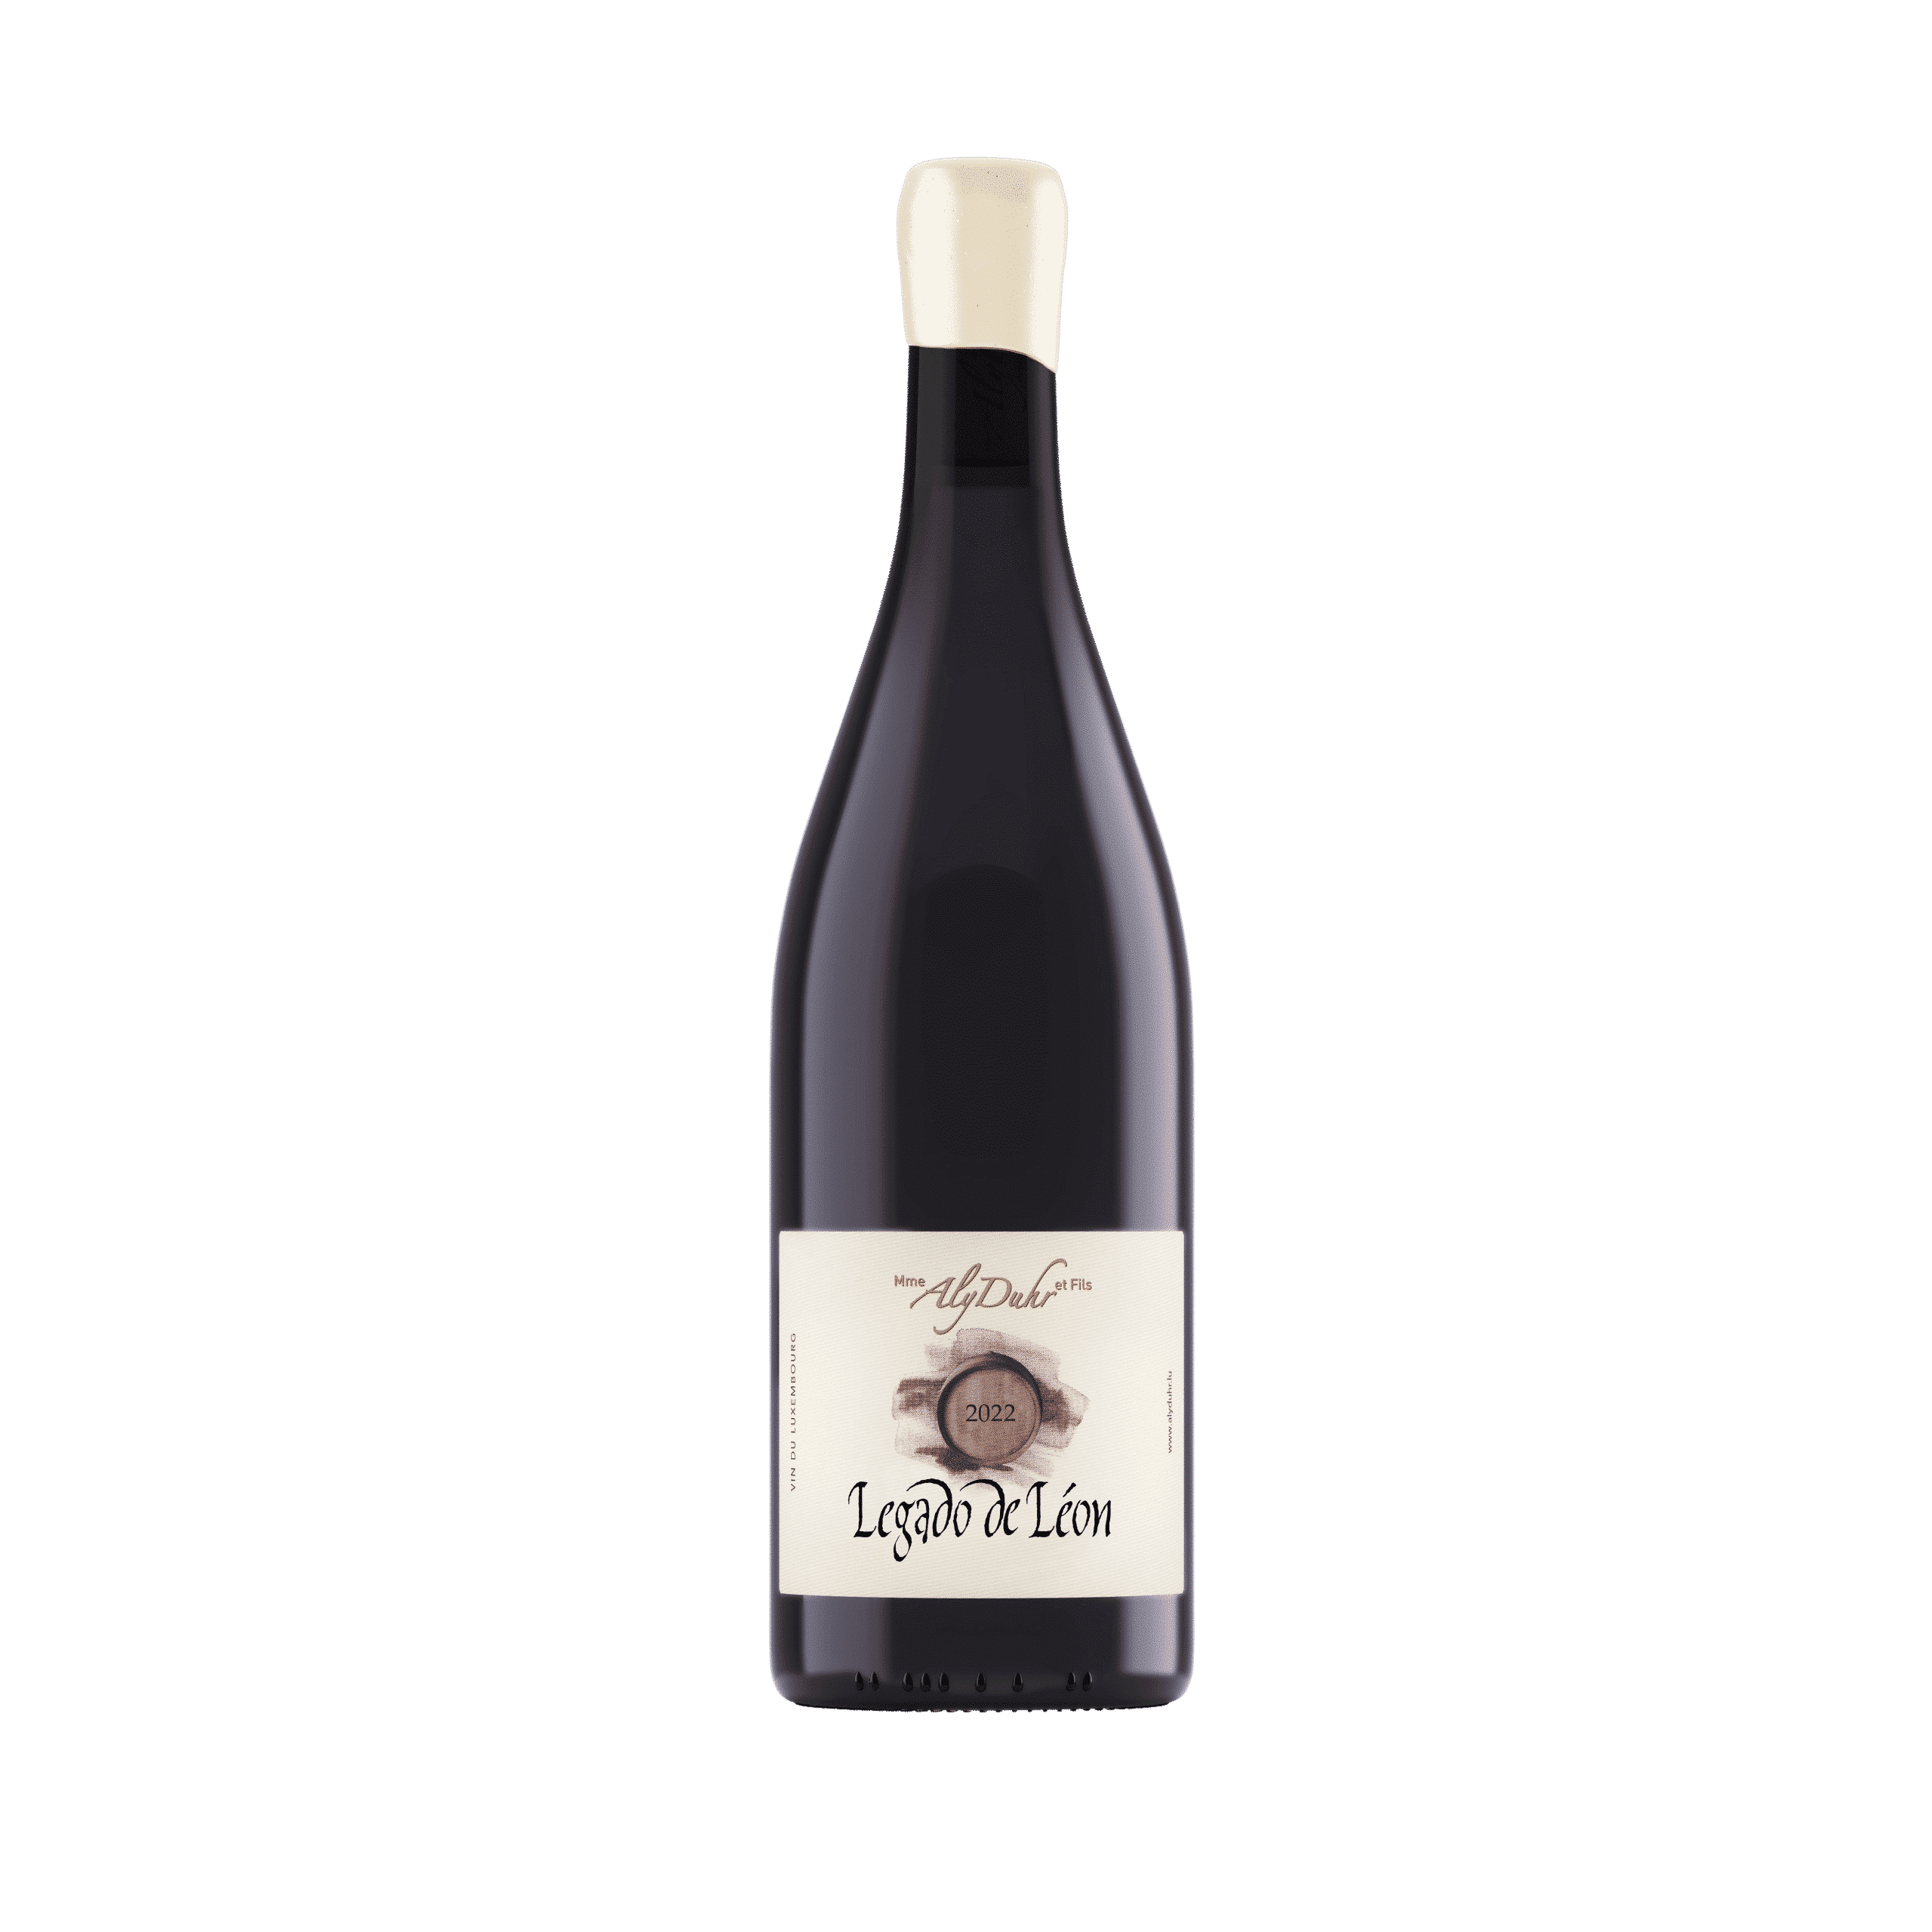 Domaine Madame Aly Duhr - - Aly Duhr Wein 2022 Legado de leon